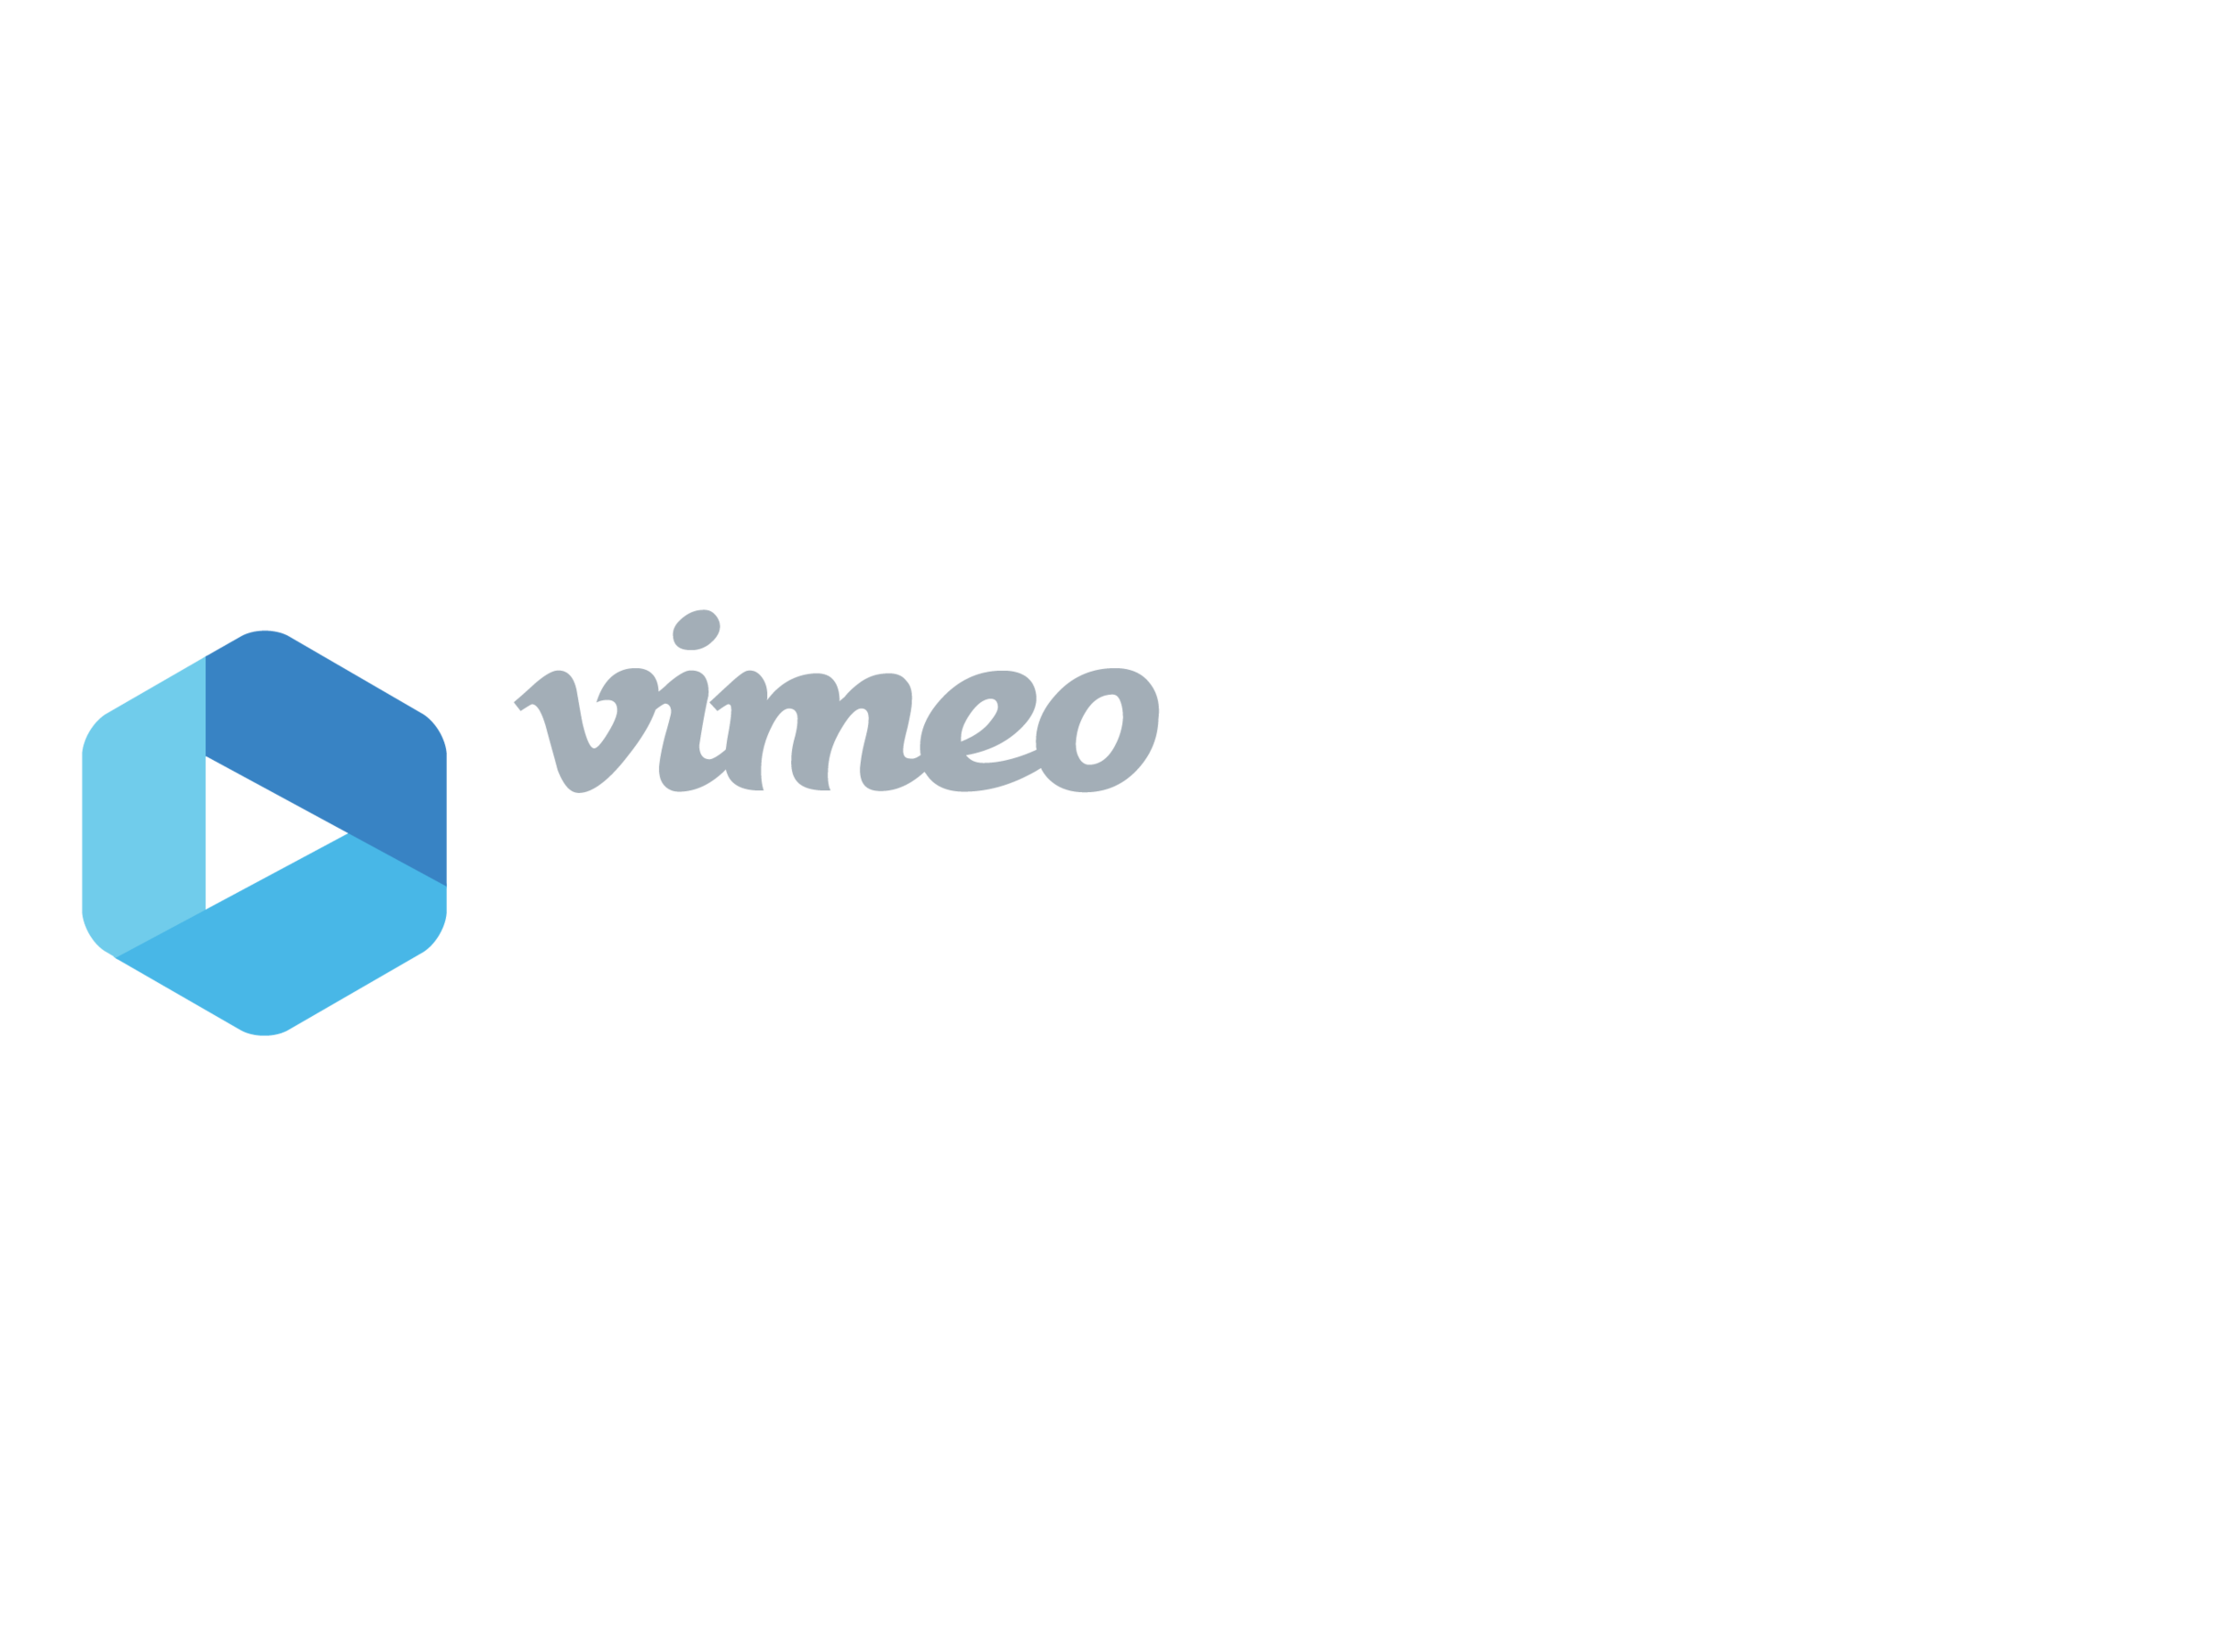 vimeo on demand download